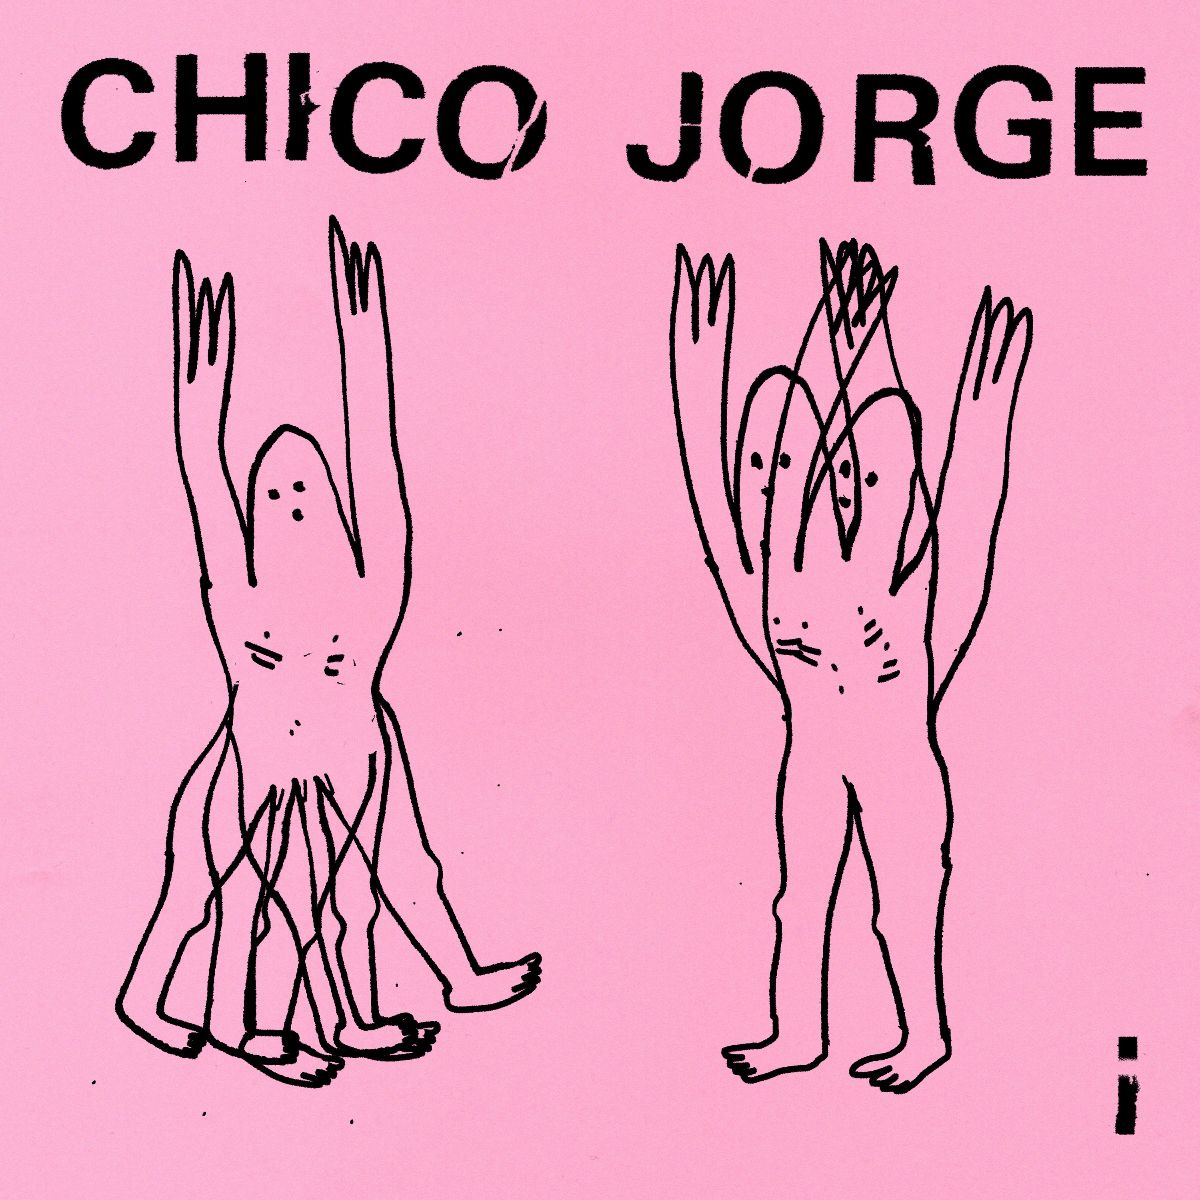 Chico jorge I